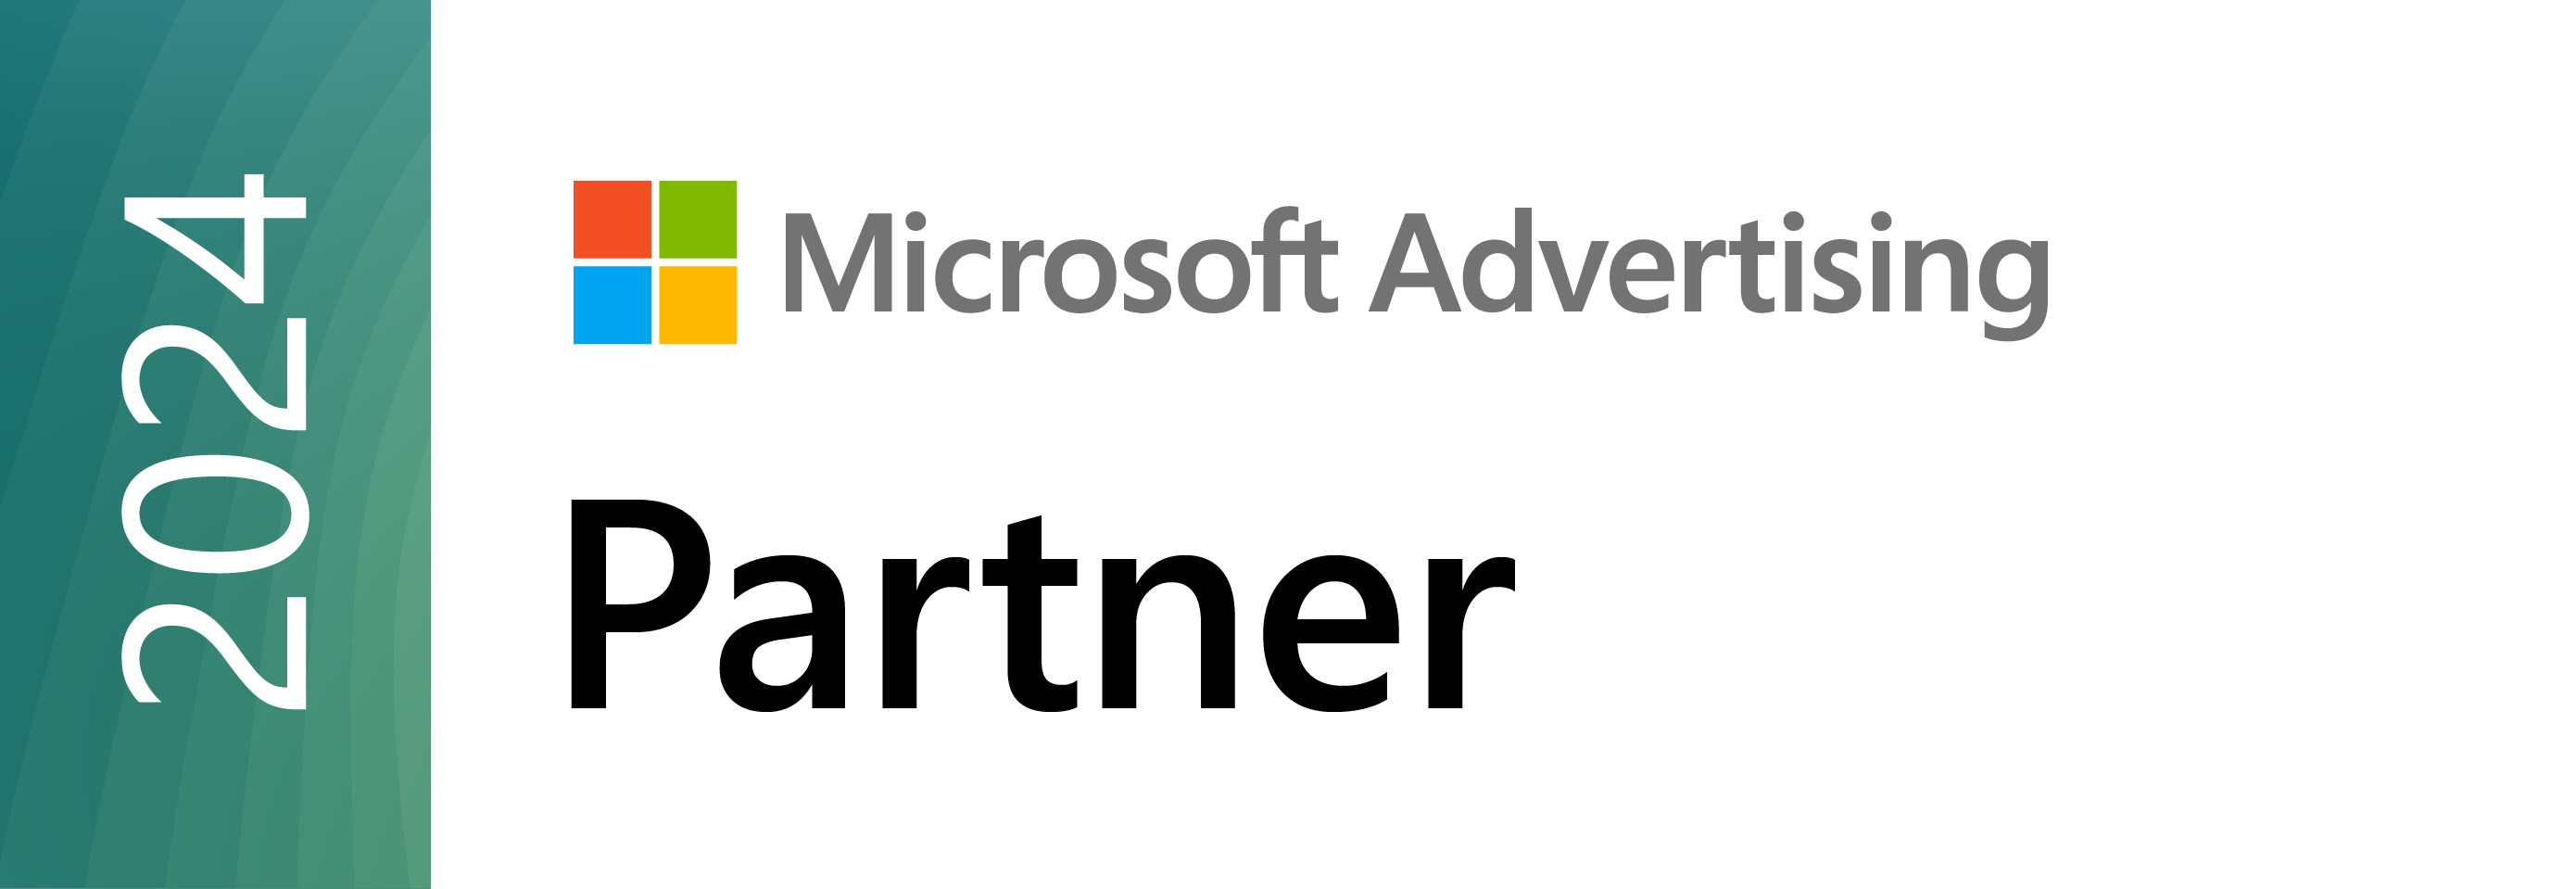 Microsoft Advertising Partner Logo